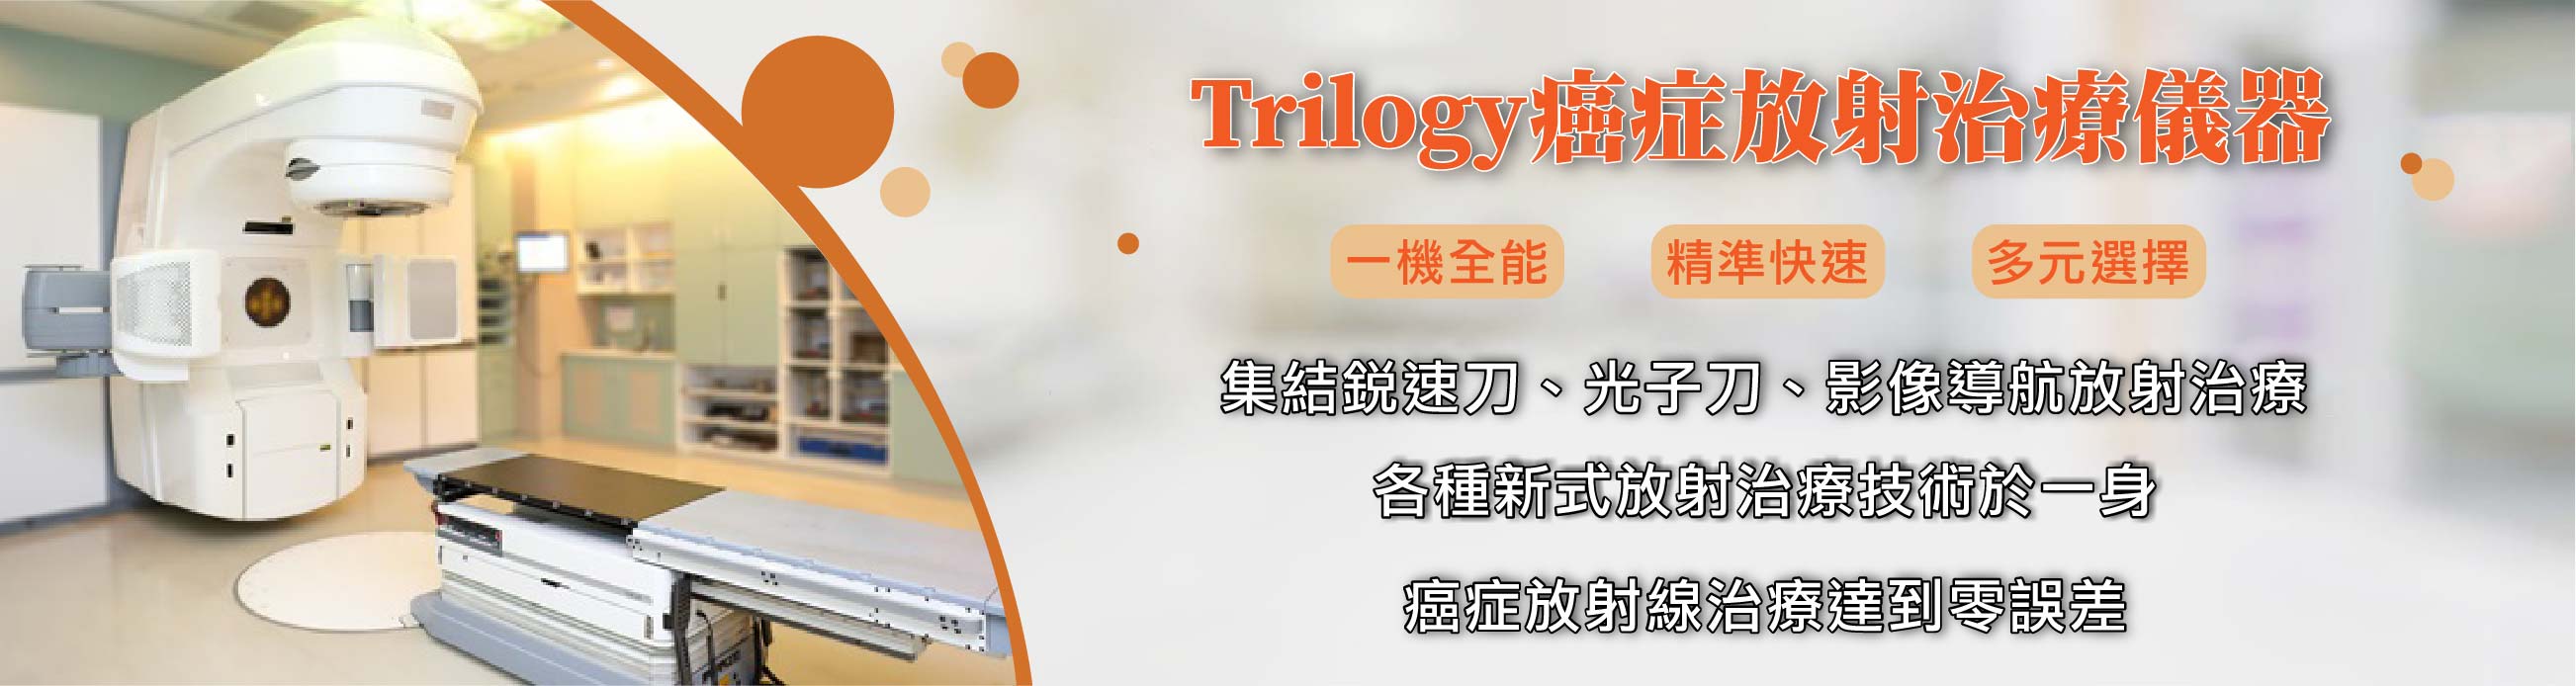 08 Trilogy.jpg